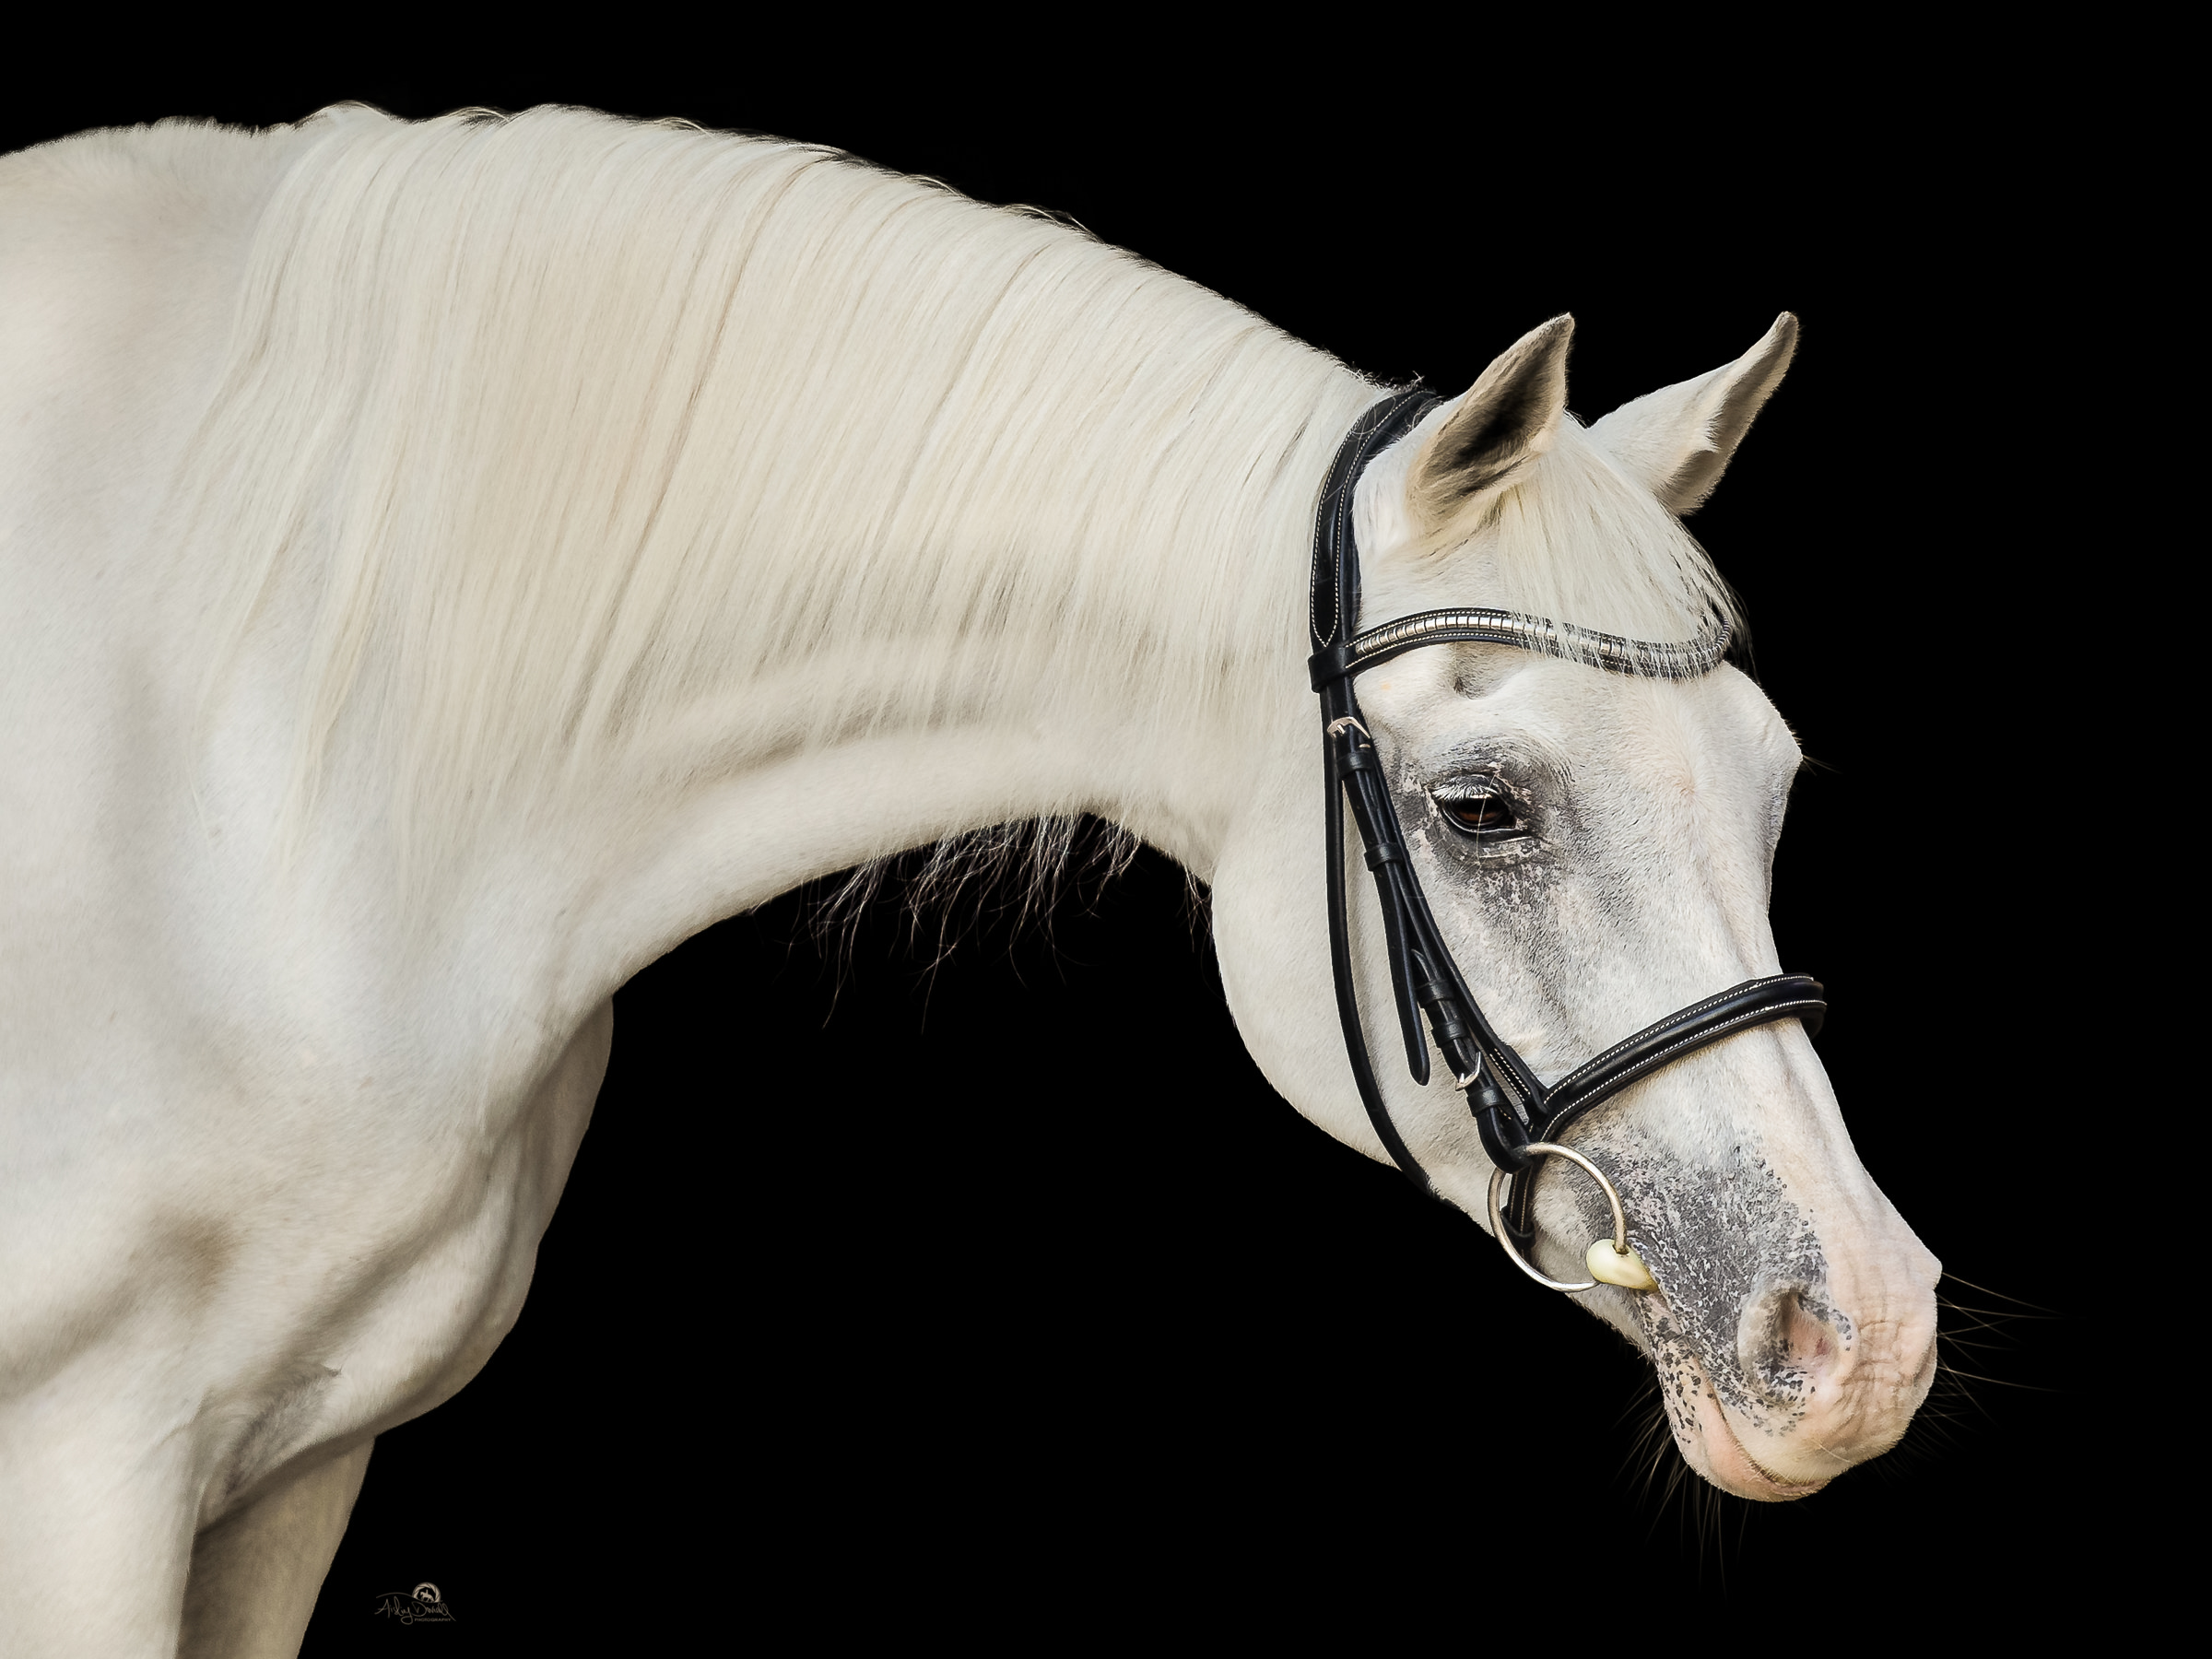 Grey Arabian horse portrait with a black background